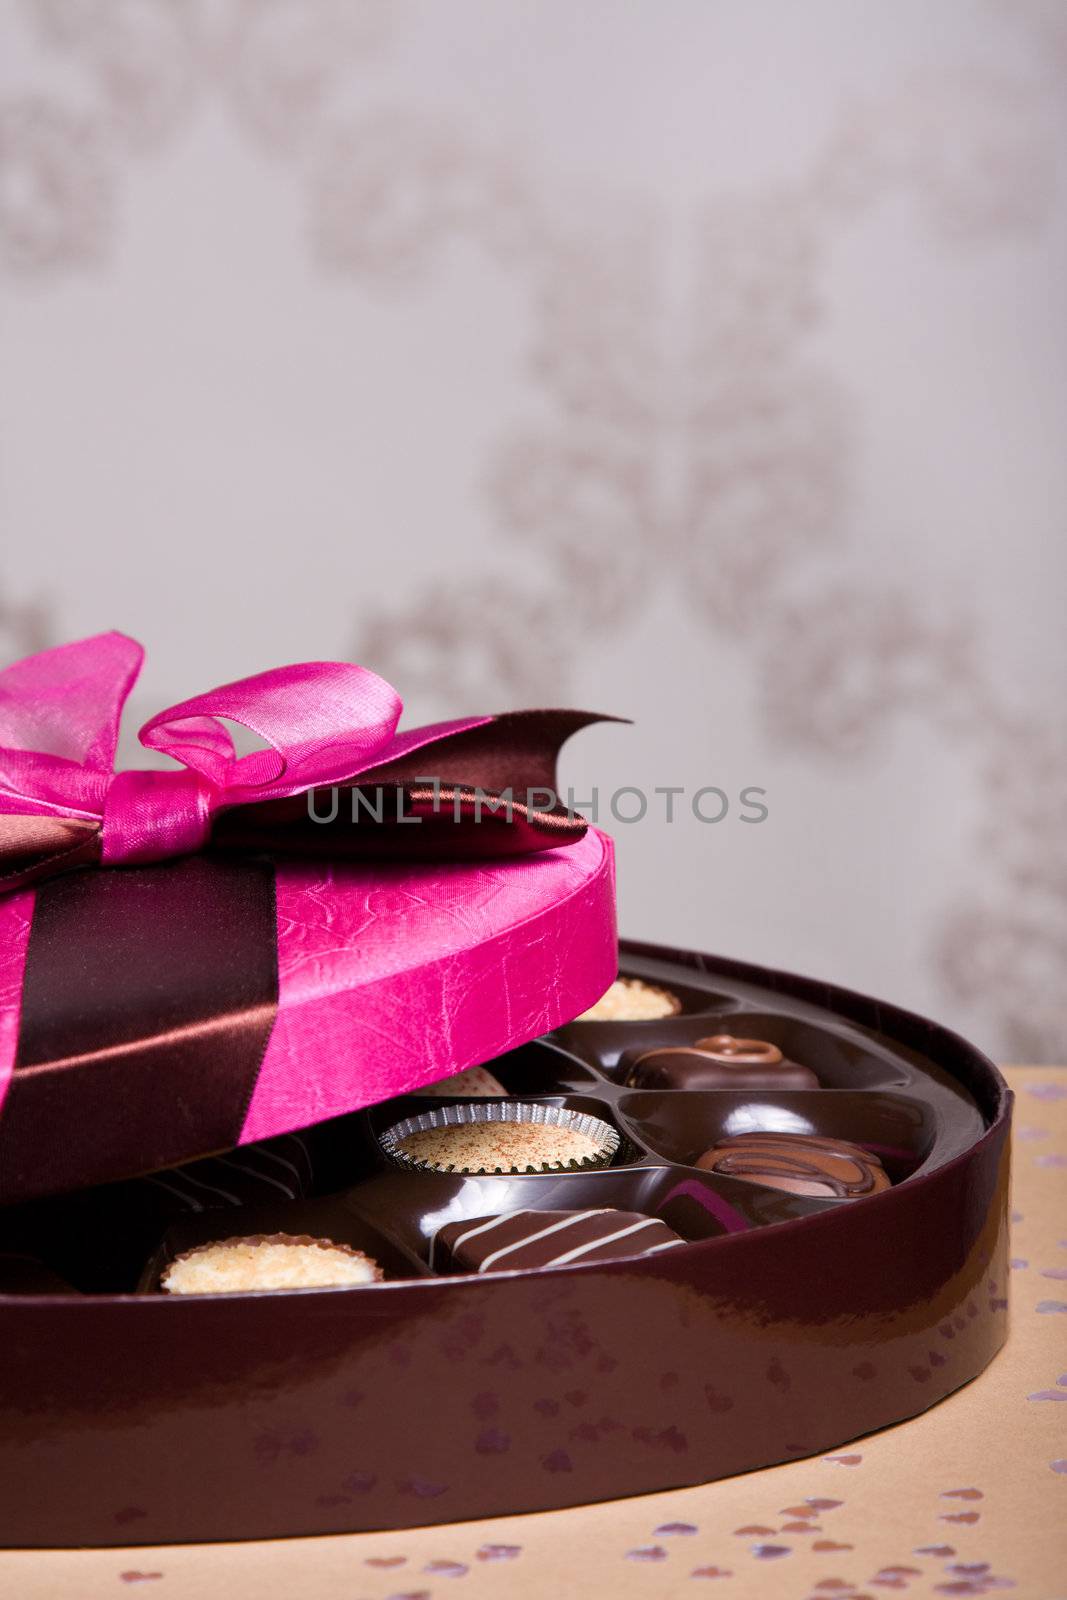 Box of chocolates by RuthBlack